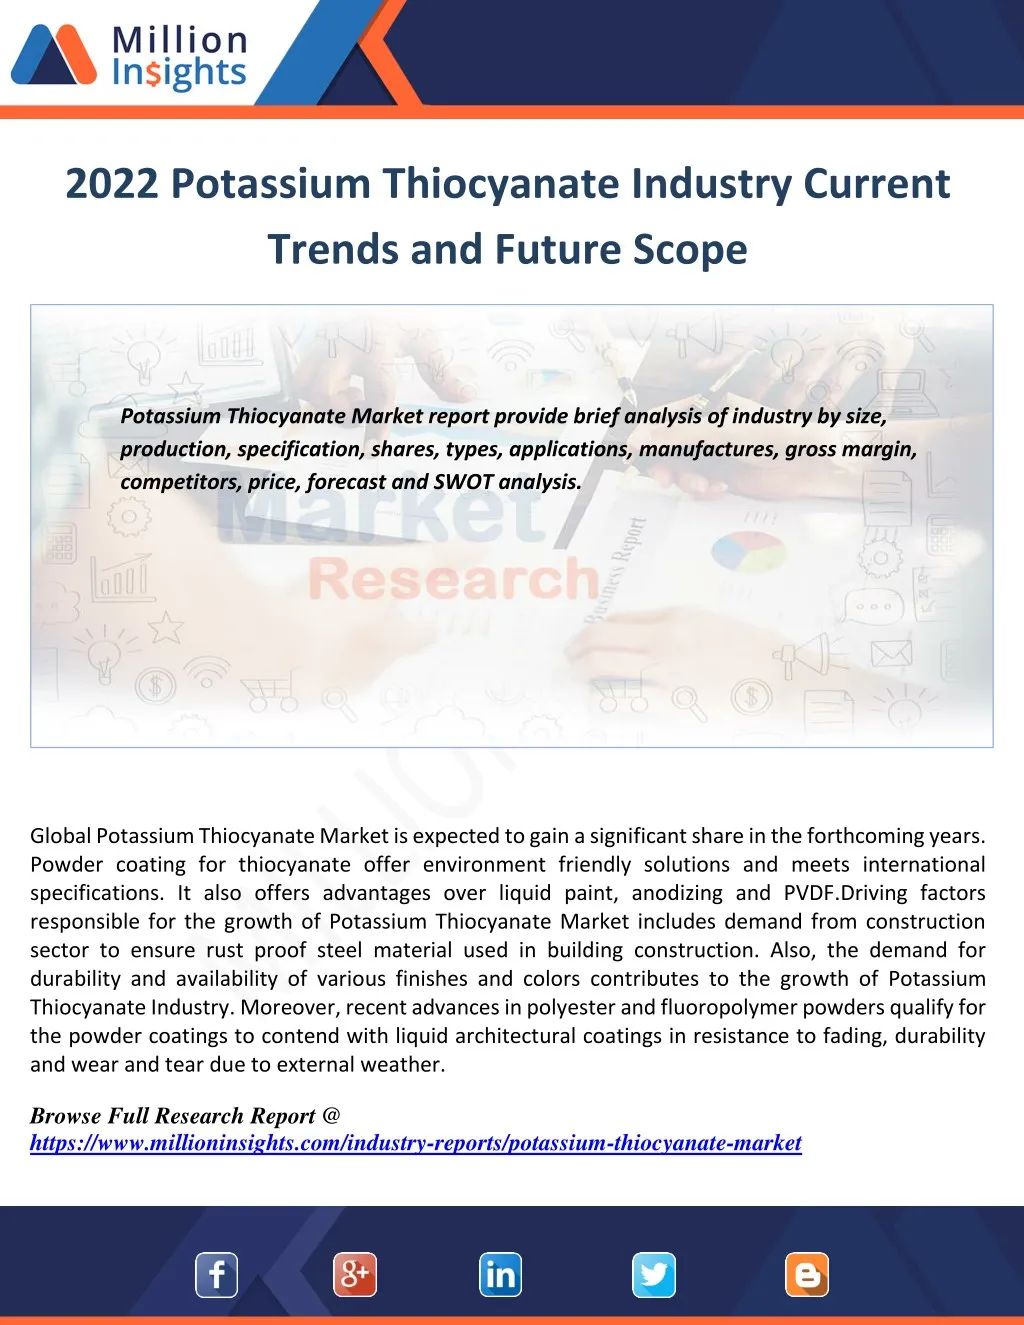 2022 potassium thiocyanate industry current